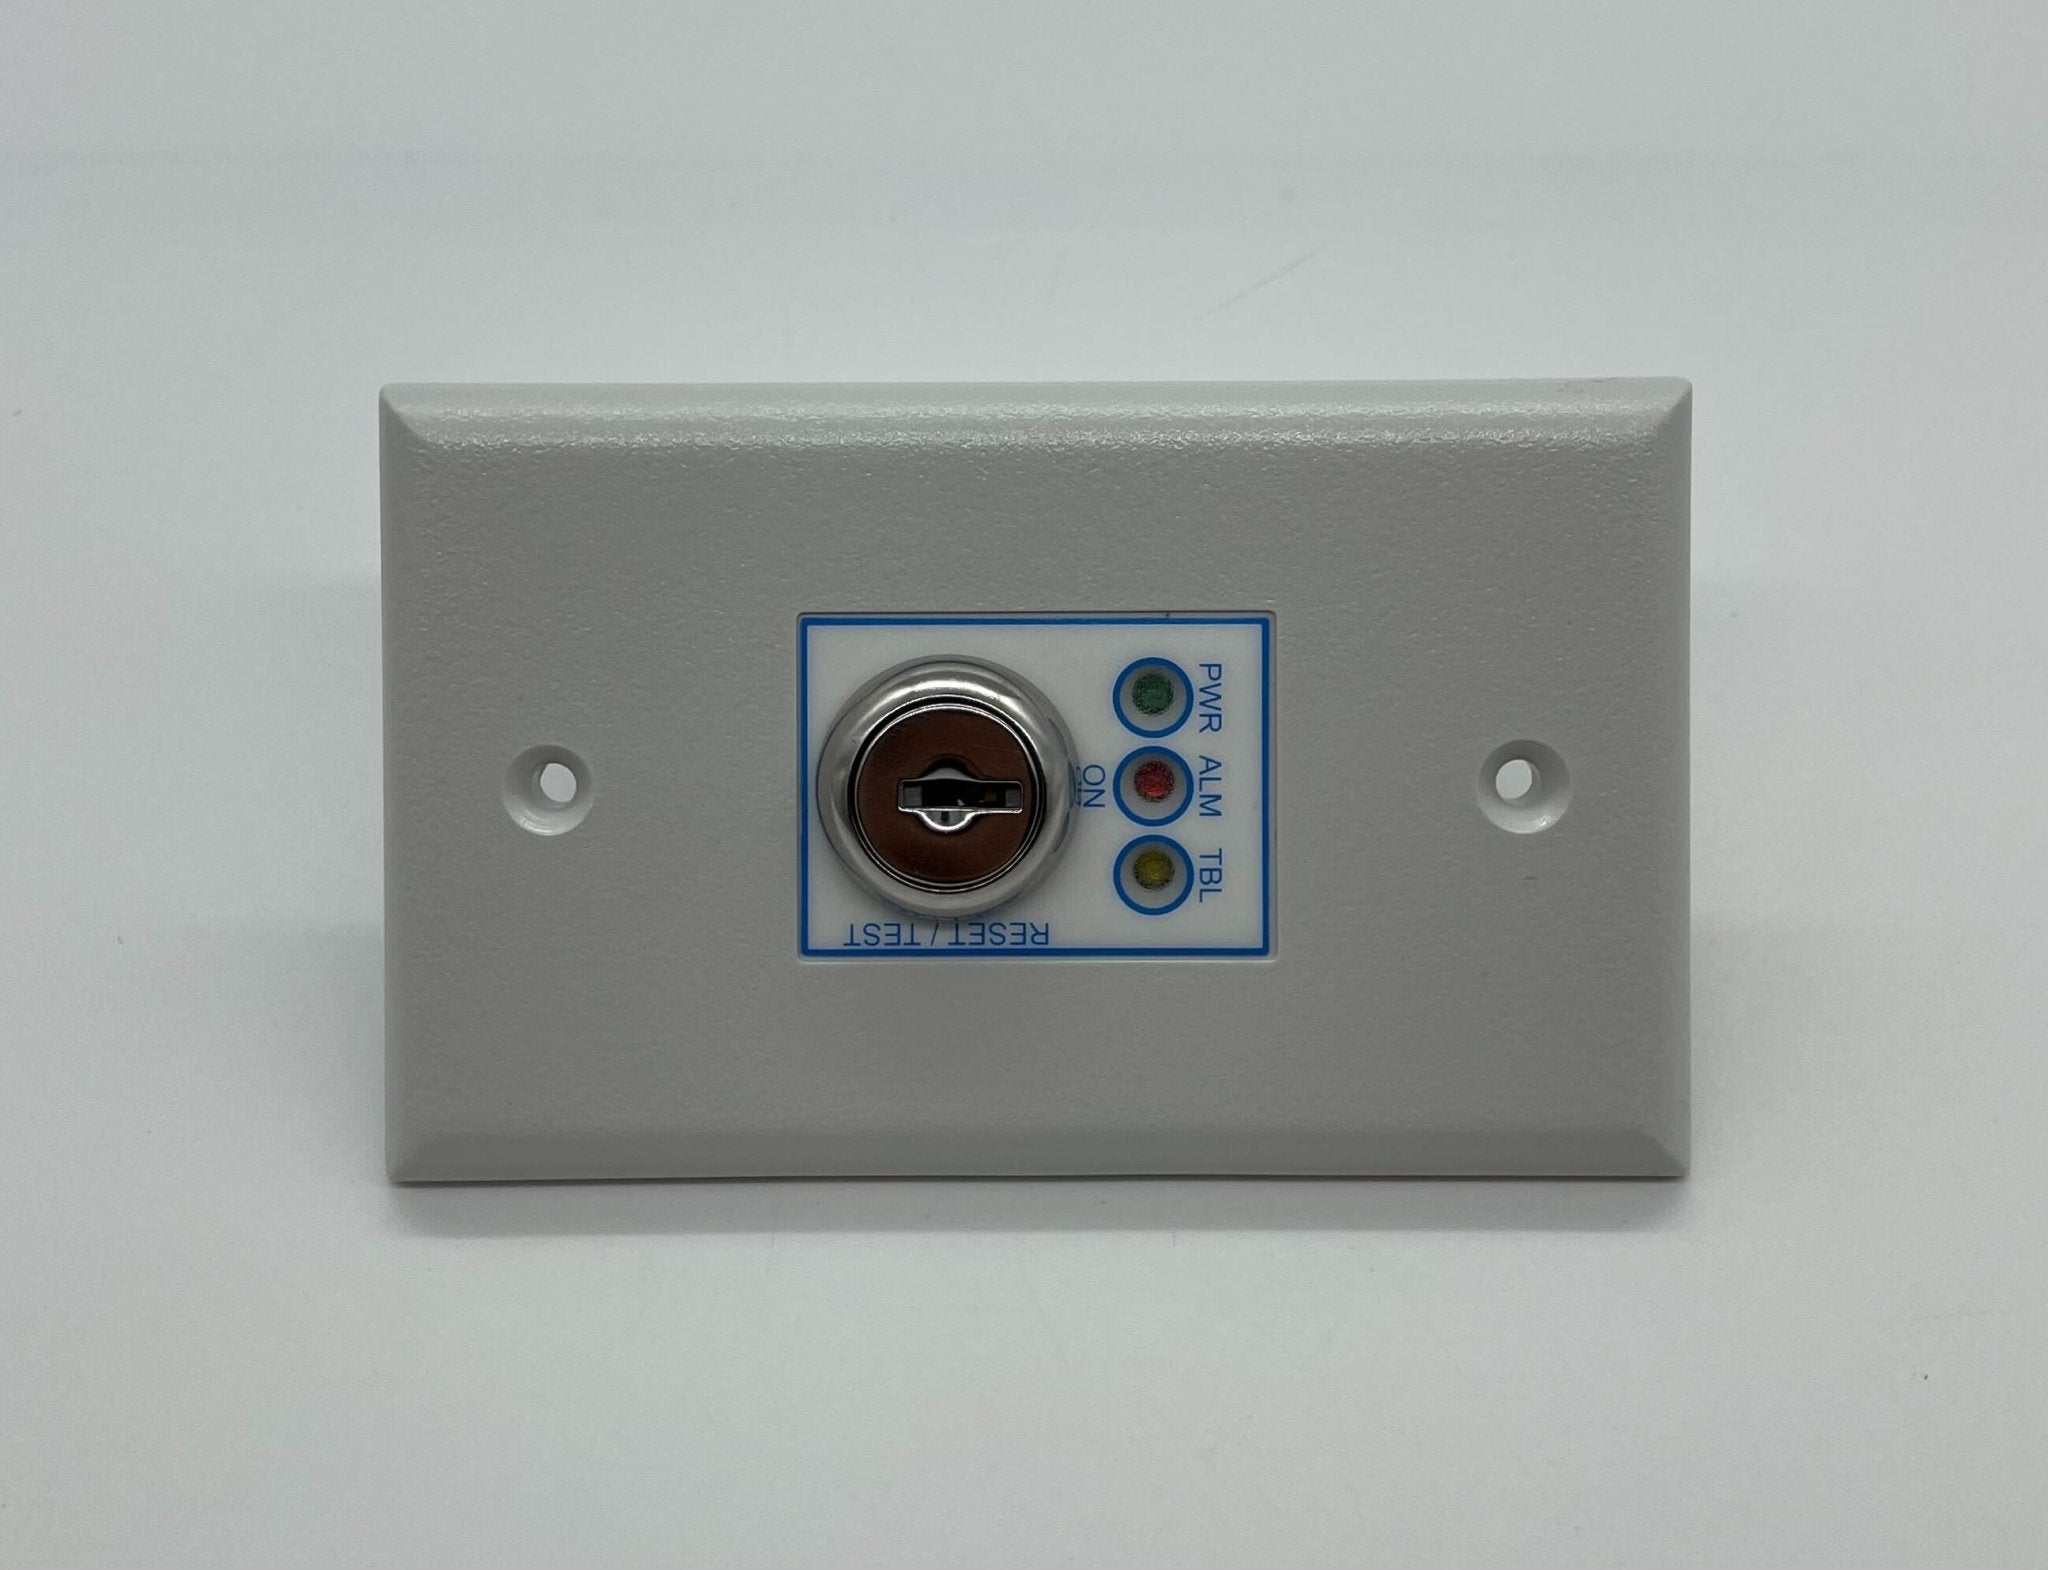 Edwards SD-TRK4 - The Fire Alarm Supplier